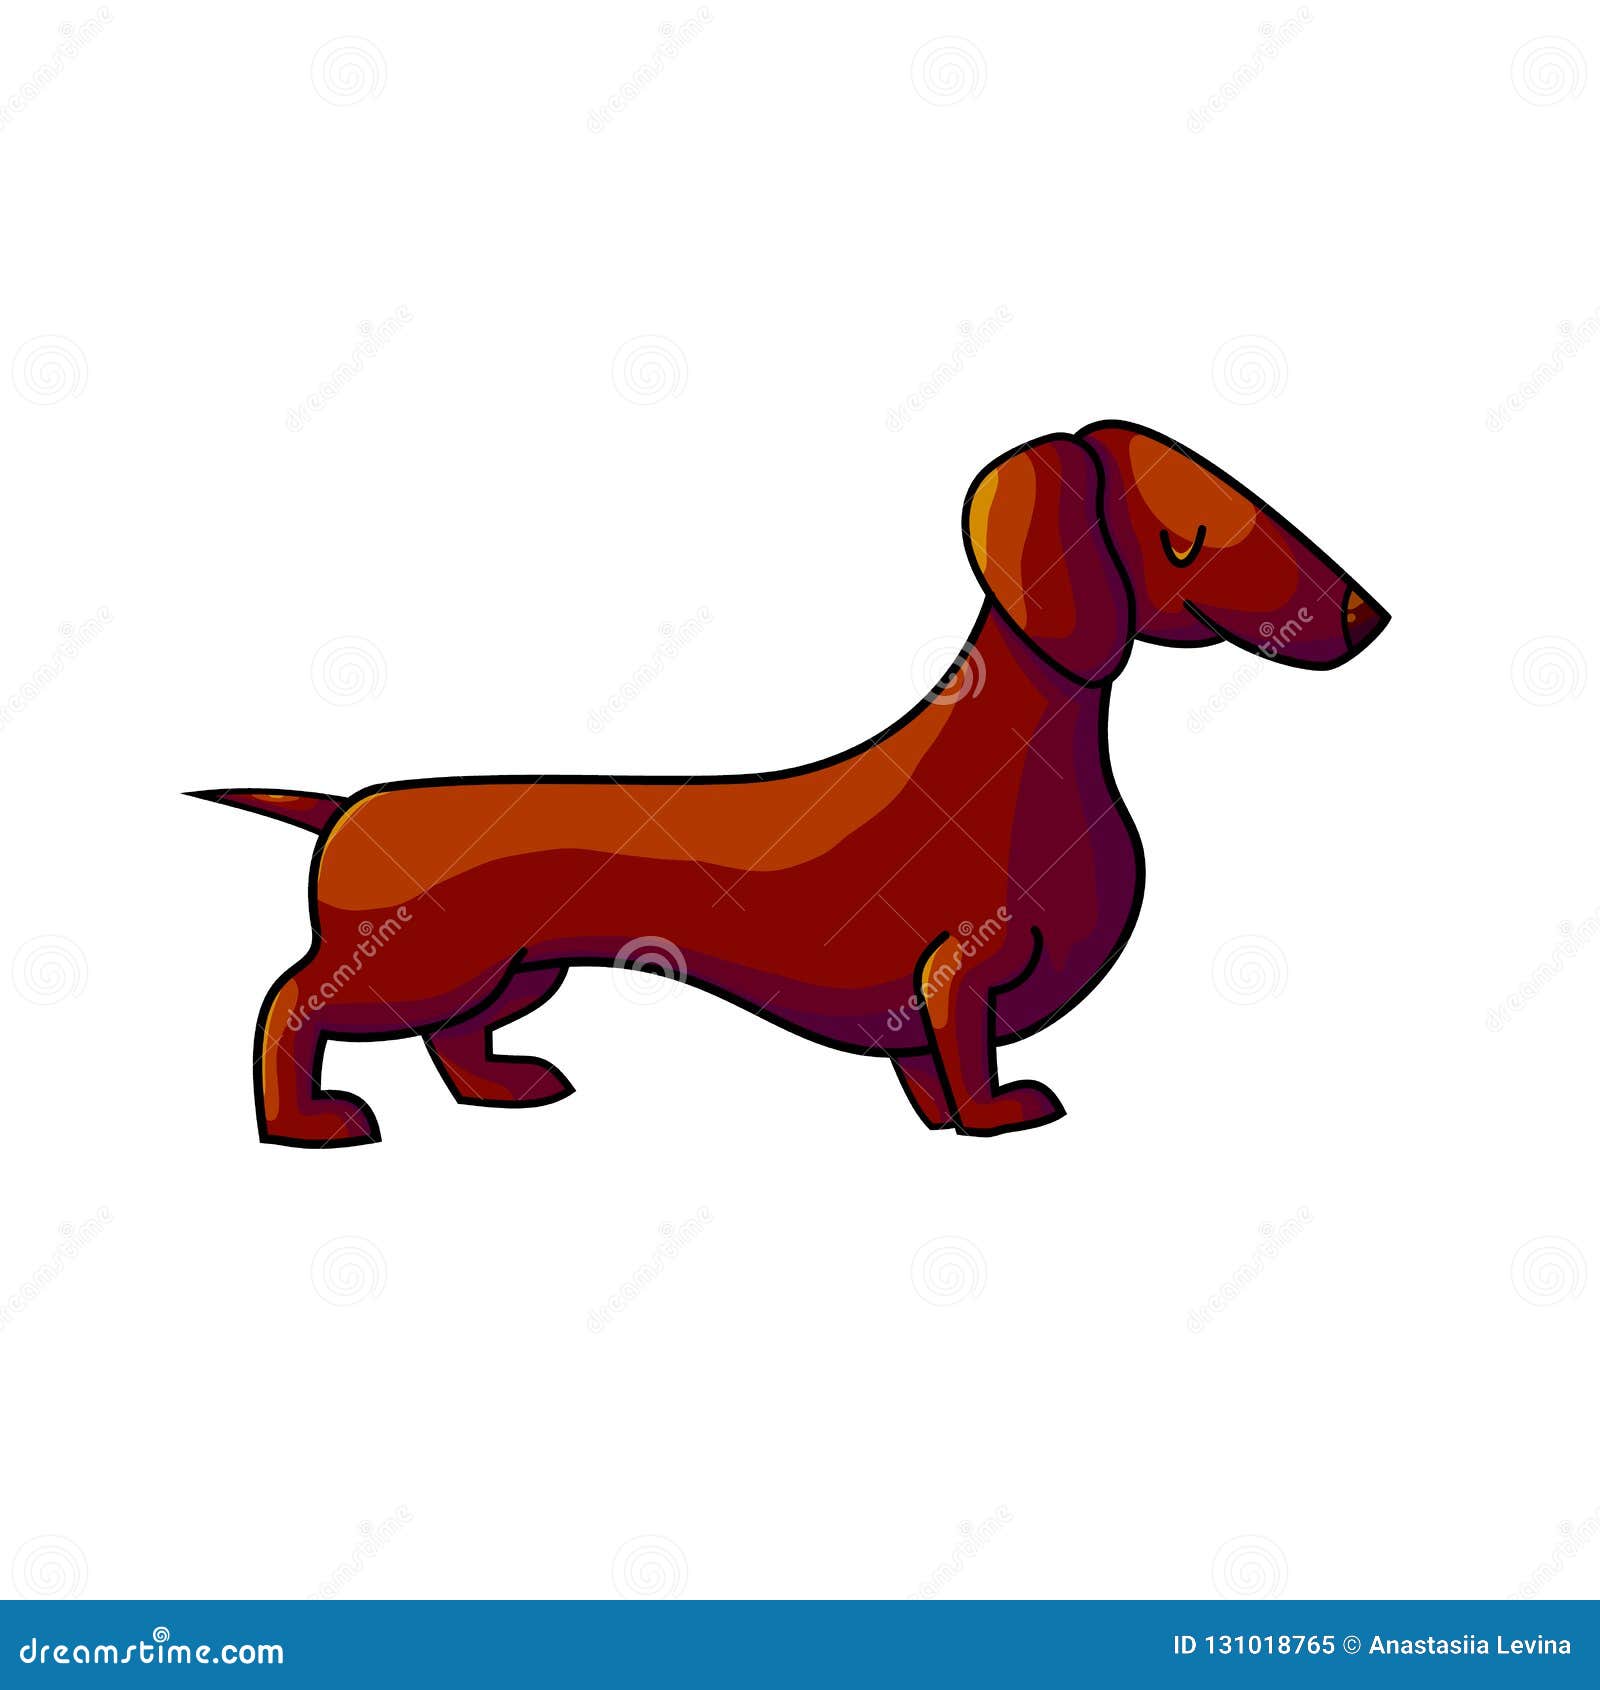 Cute cartoon dachshund stock vector. Illustration of face